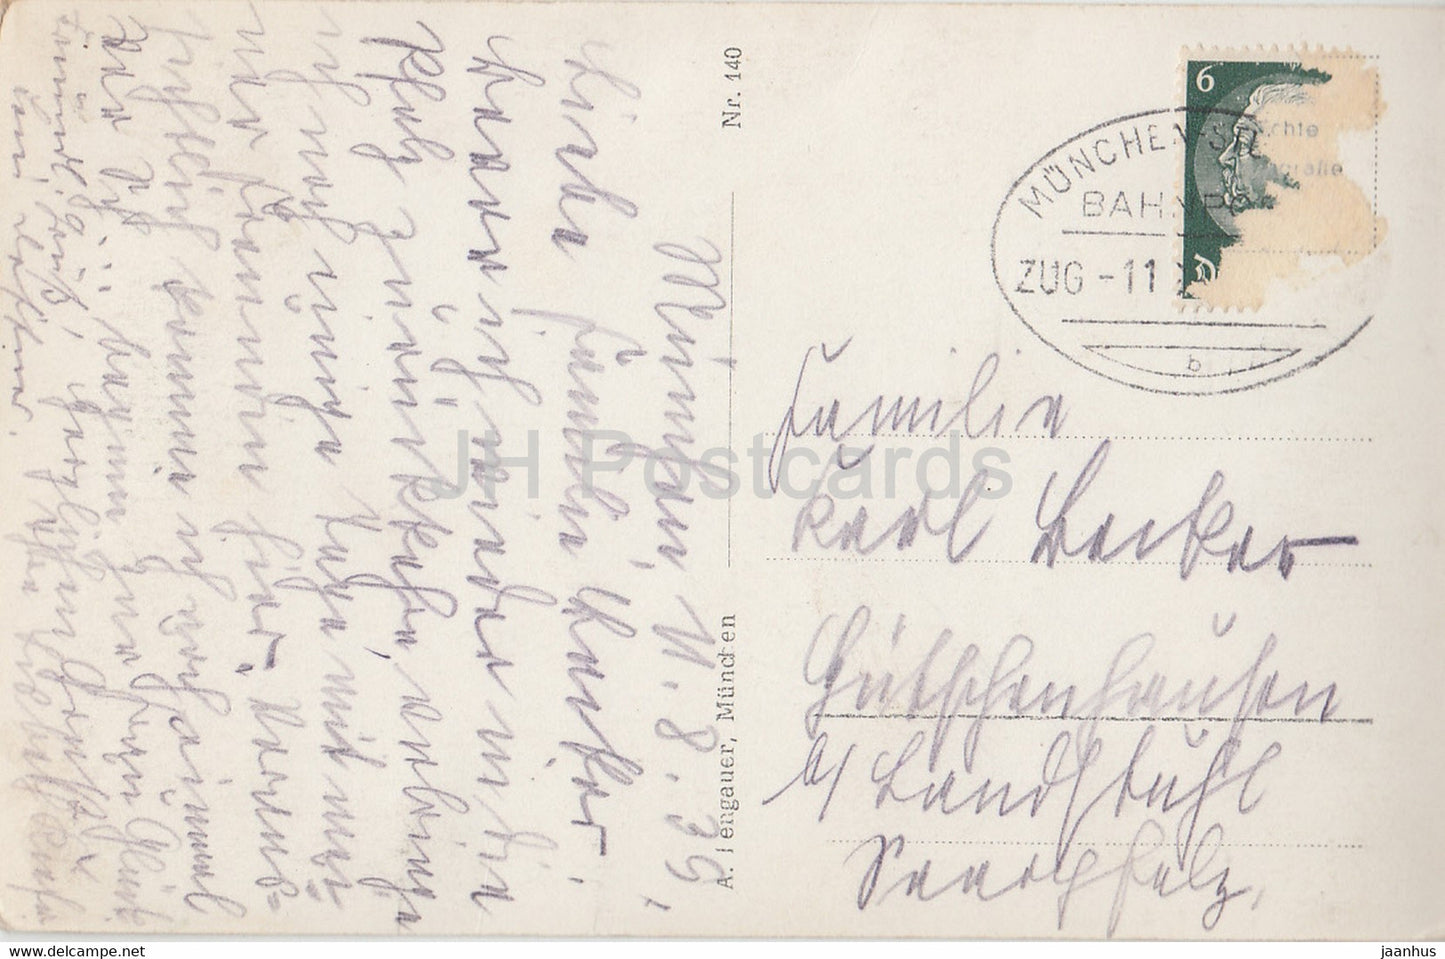 Munchen - Rathaus mit Frauenkirche - Munich - 140 - carte postale ancienne - 1939 - Allemagne - utilisé